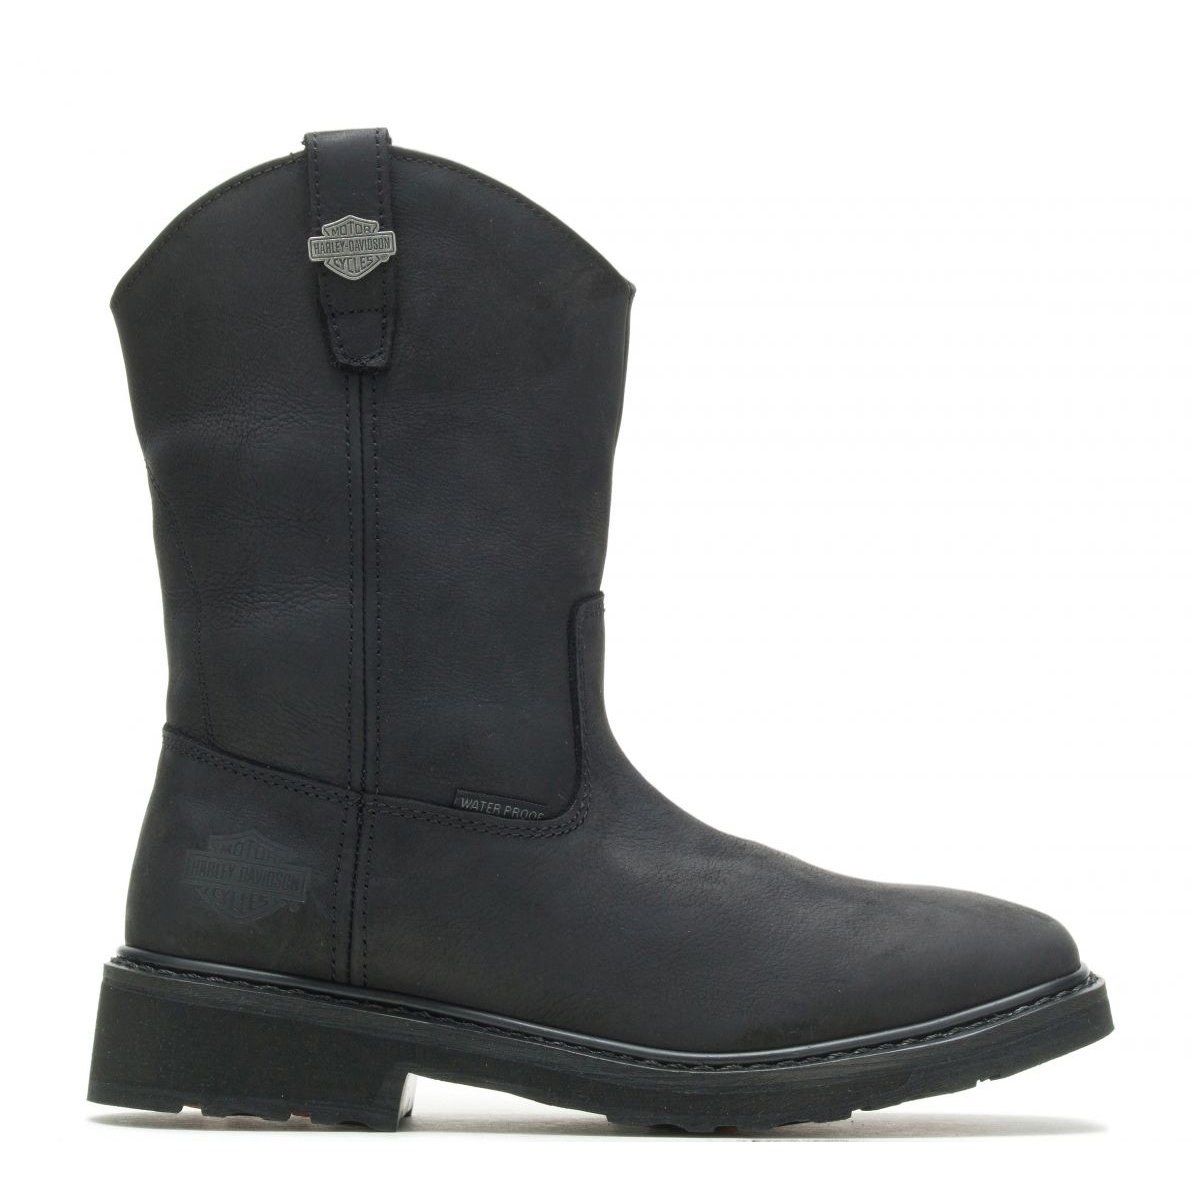 HARLEY-DAVIDSON WORK Men's Altman Western Classic Soft Toe Work Boot Black - D93561 Black/black - Black/black, 11